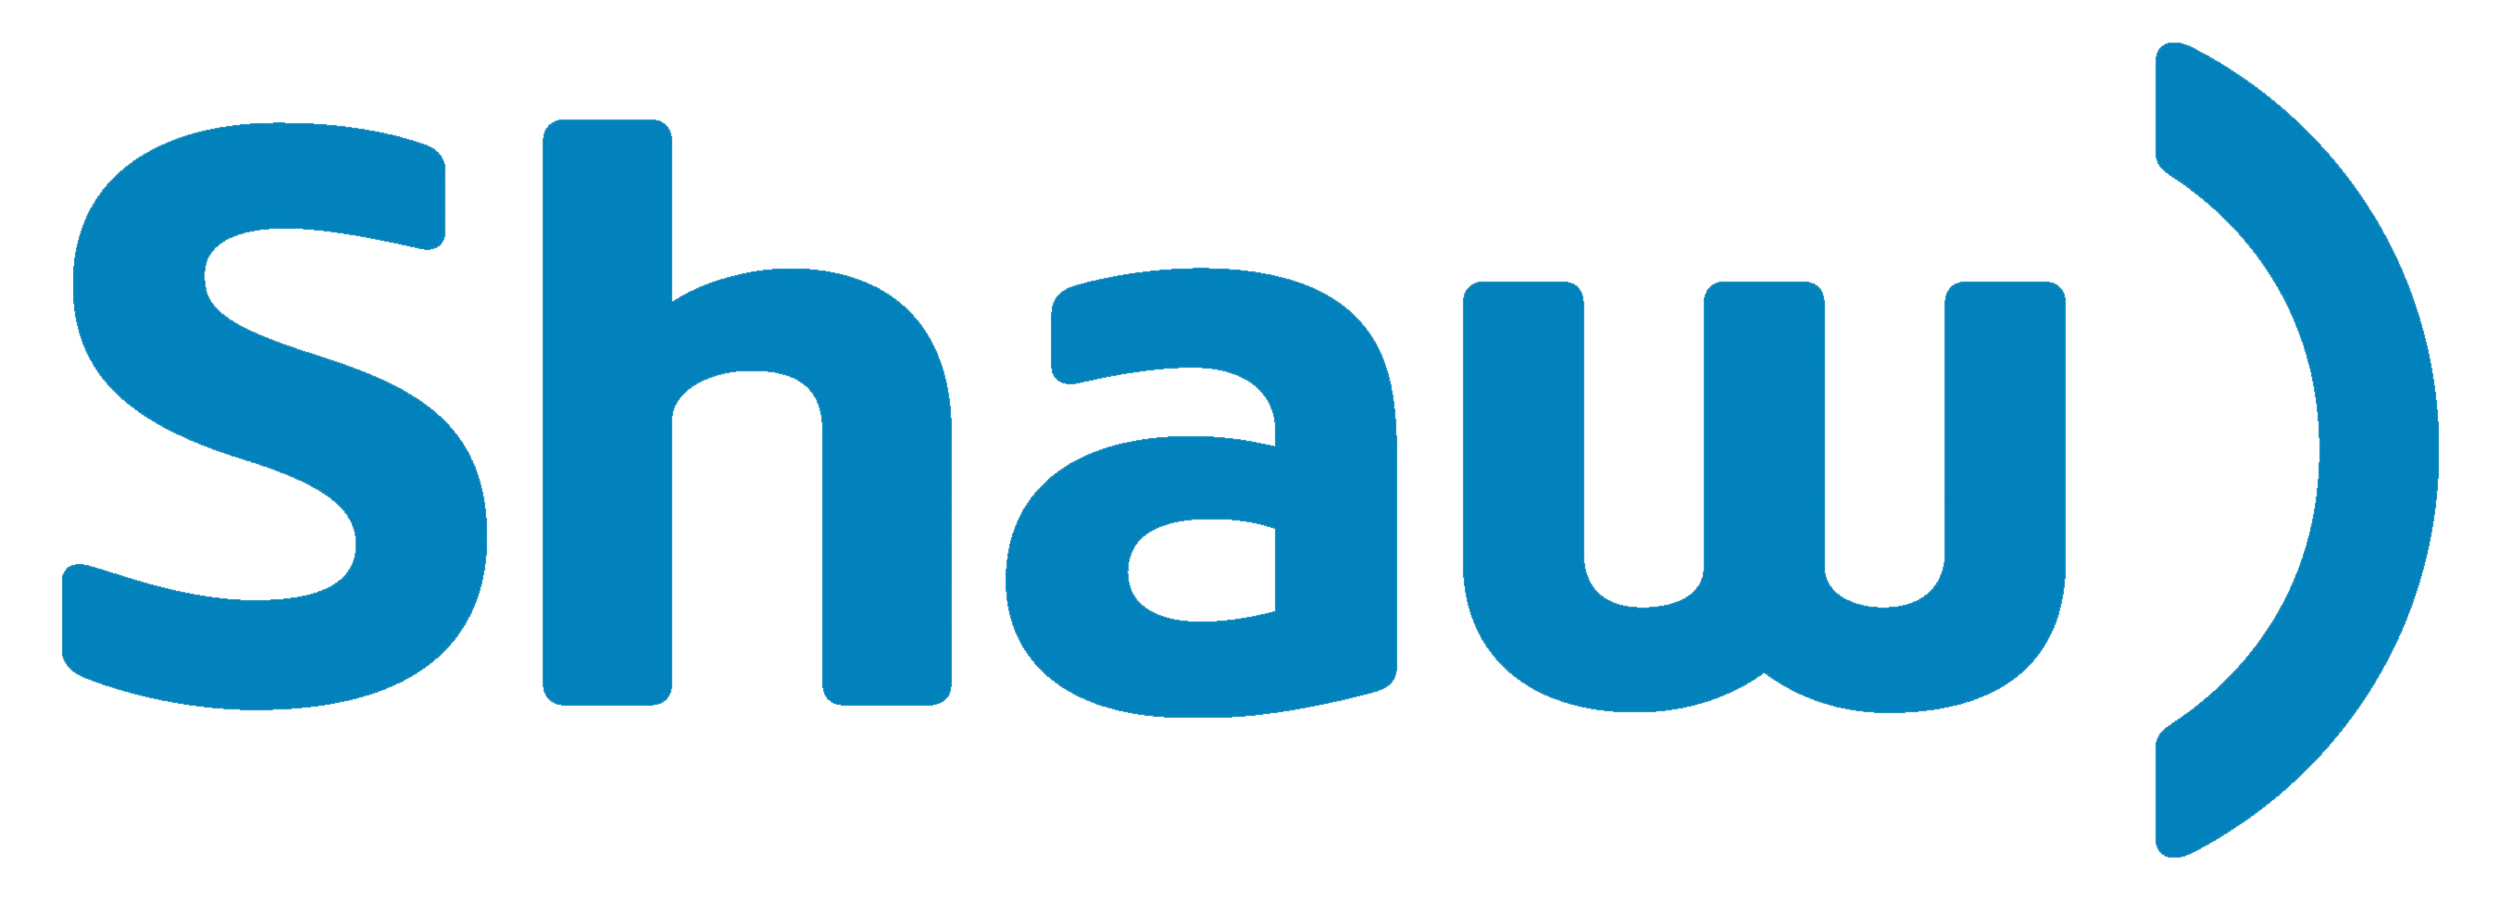 Shaw-Logo_1.png